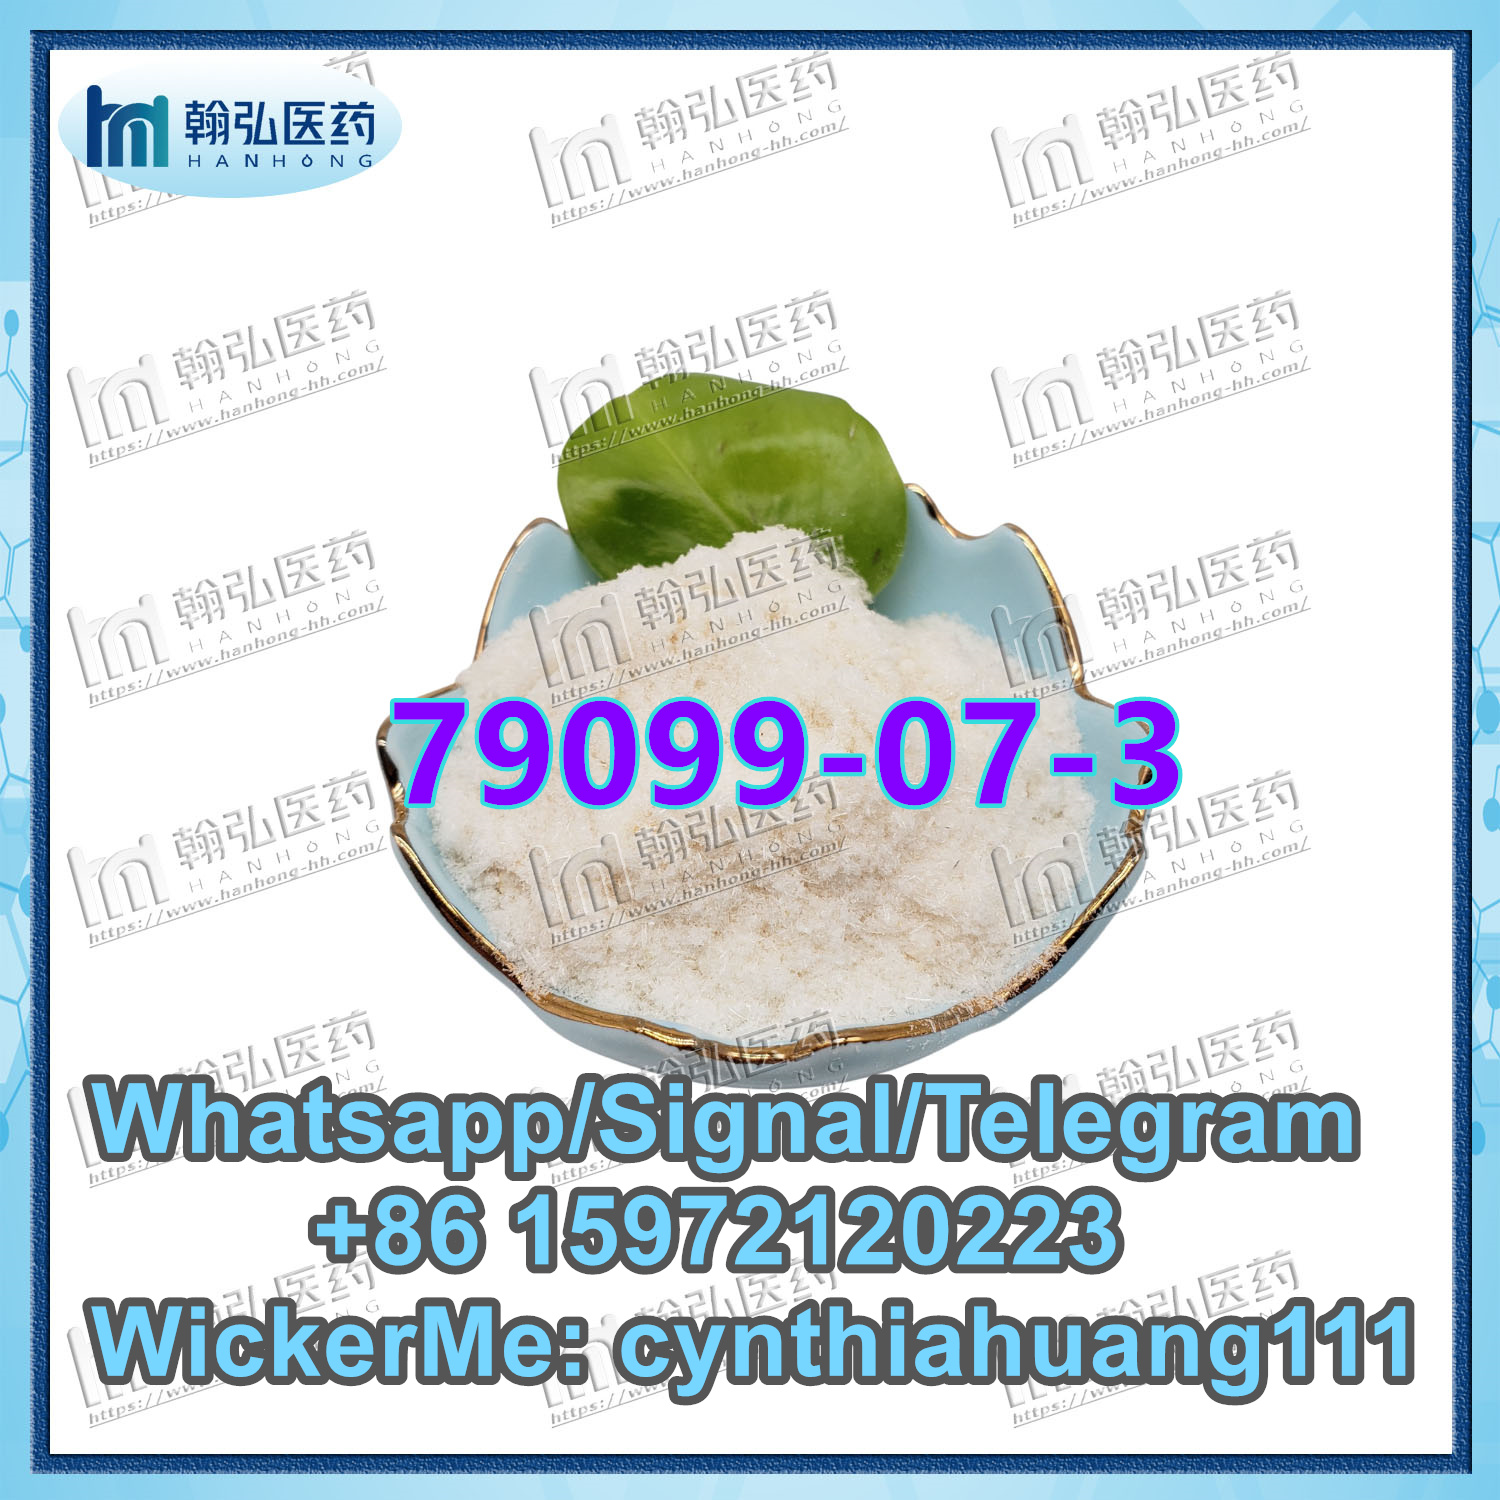 N-(tert-Butoxycarbonyl)-4-piperidone CAS 79099-07-3 Whatsapp: + 86 15972120223 Wicker: Cynthiahuang111